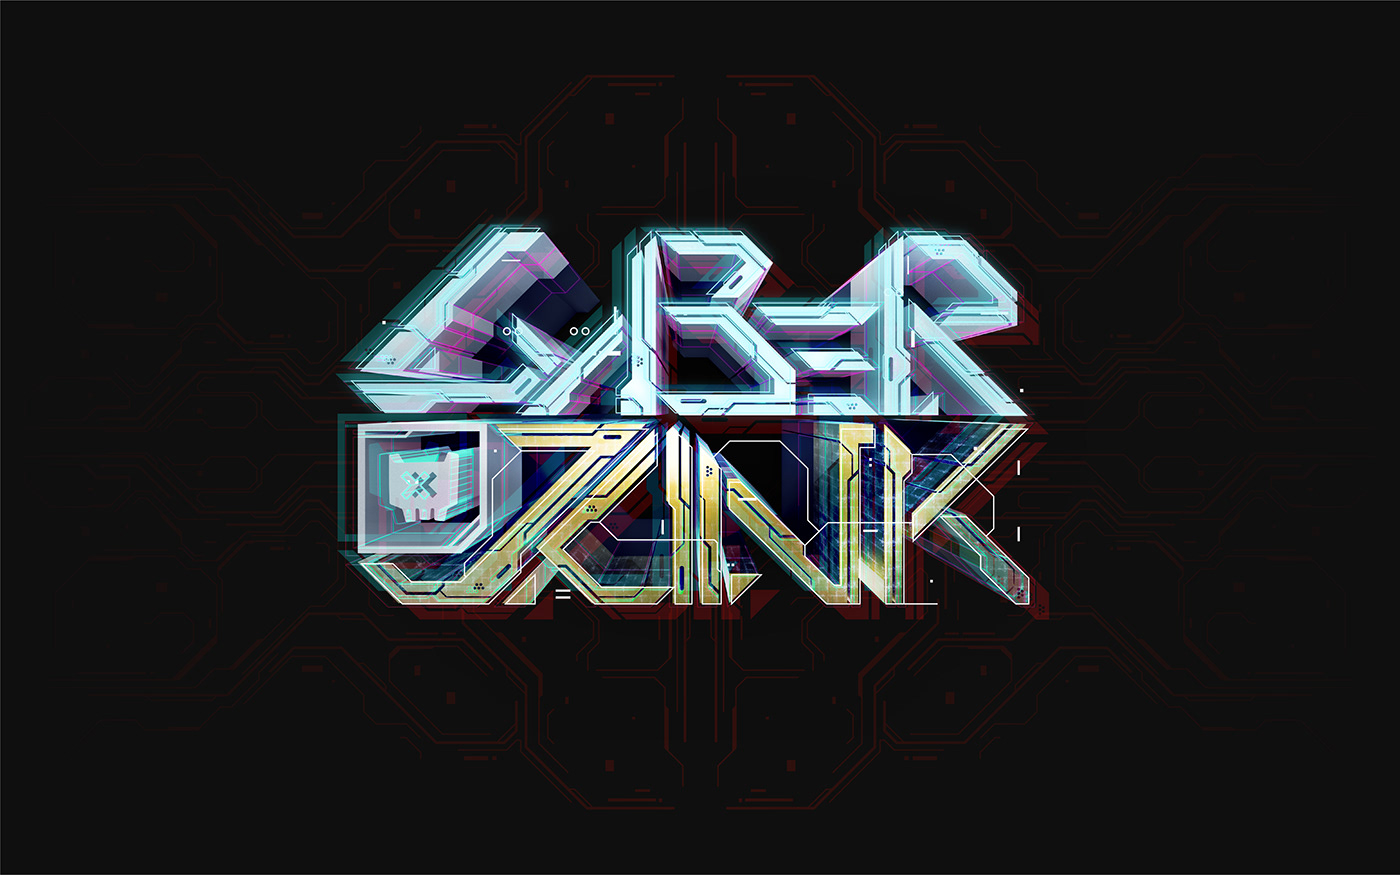 cyber punk logo FUI HUD poster futuristic head junk robot